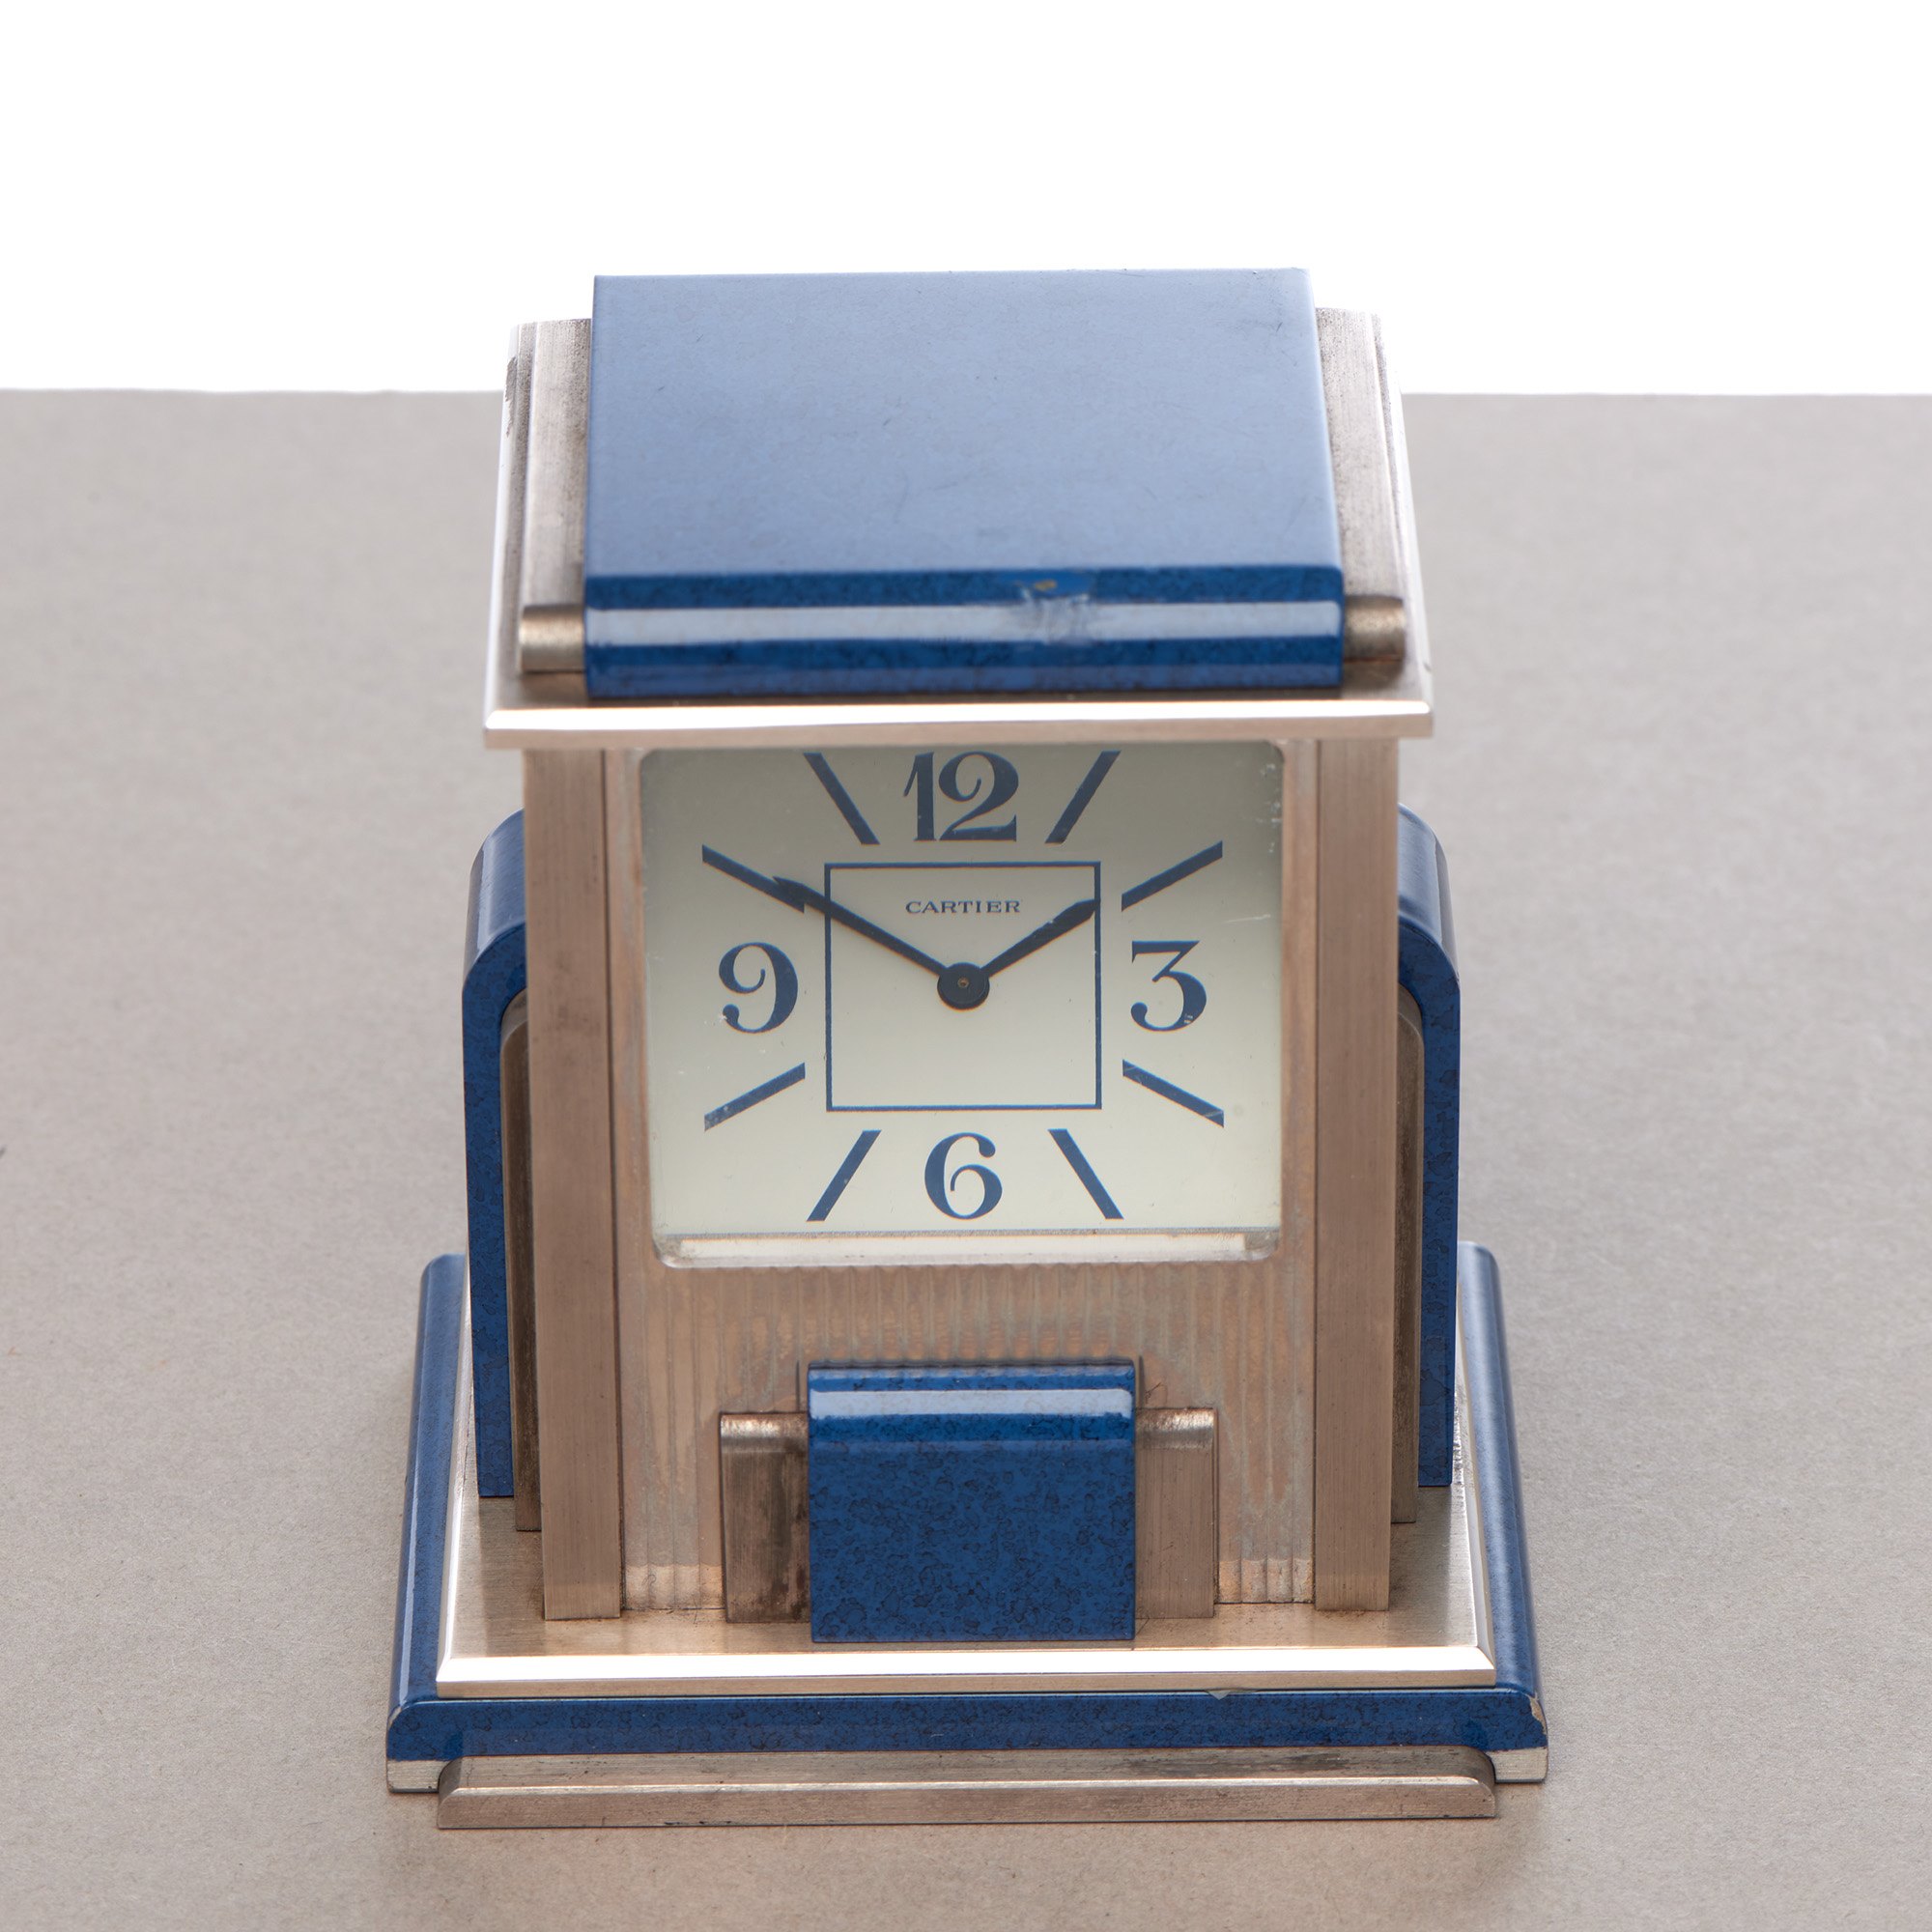 Cartier Travel Desk Clock Cartier Paris 'Mystery' Silver Plated Double Desk Clock 9118